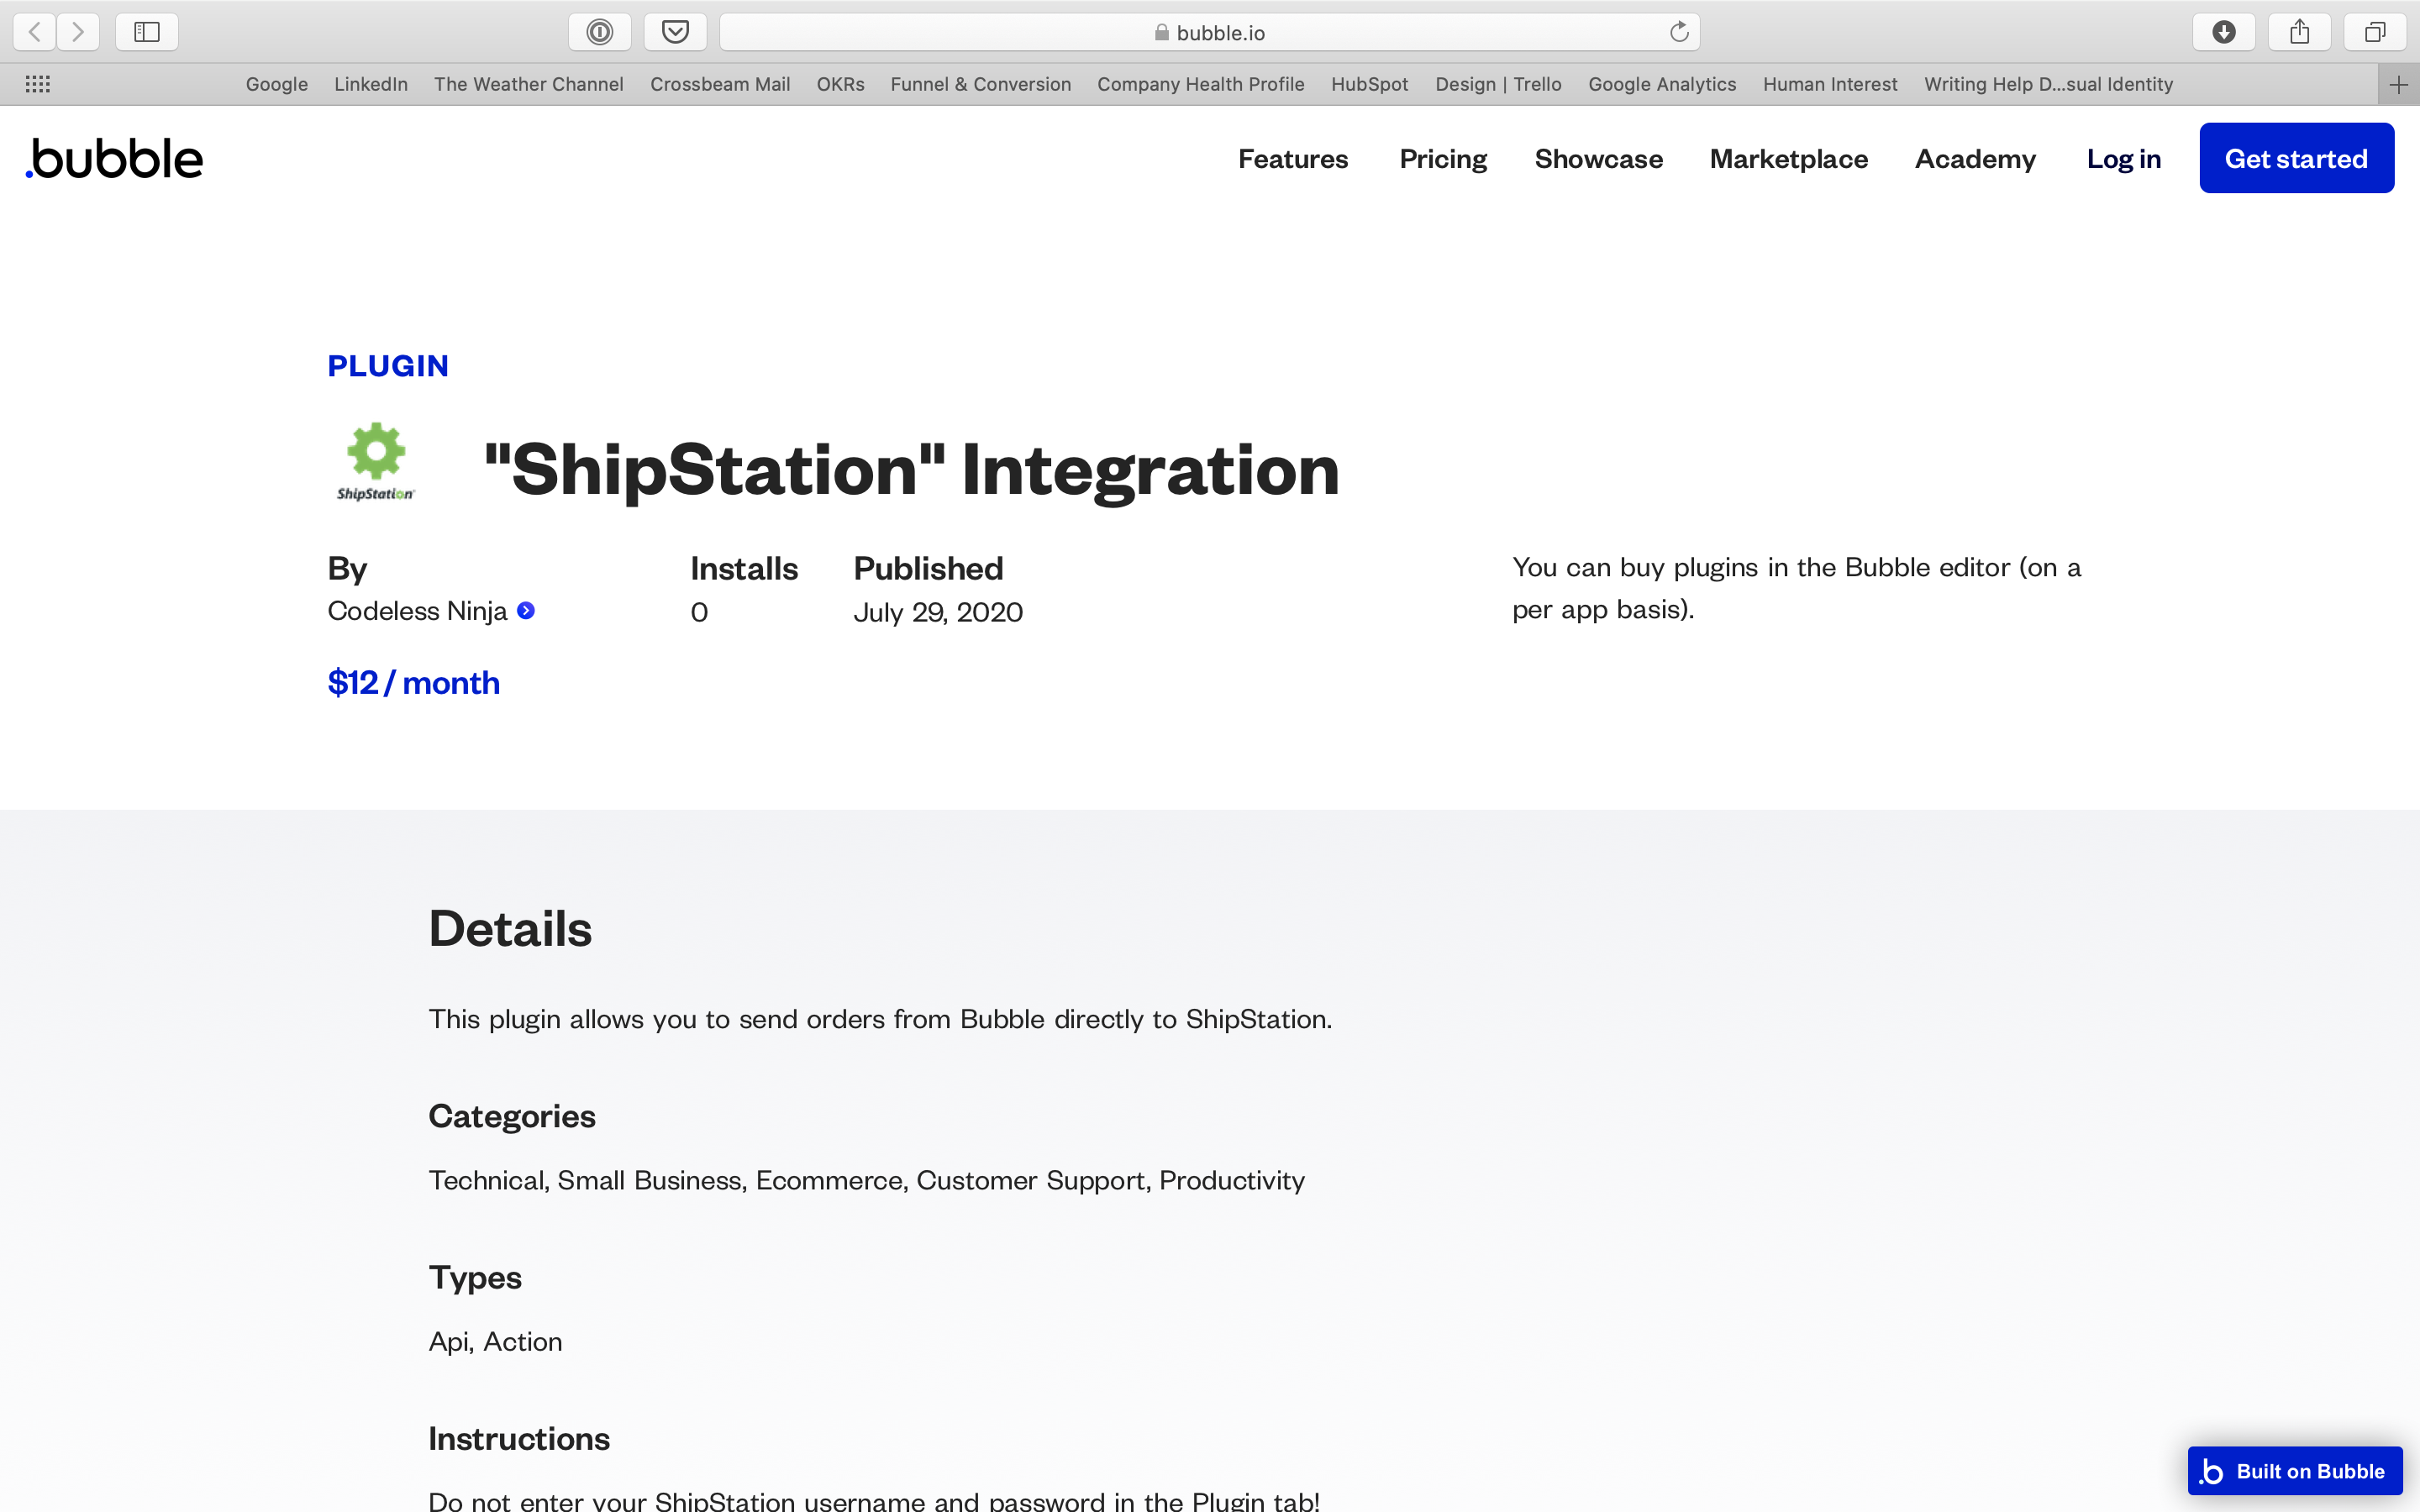 ShipStation Bubble plugin